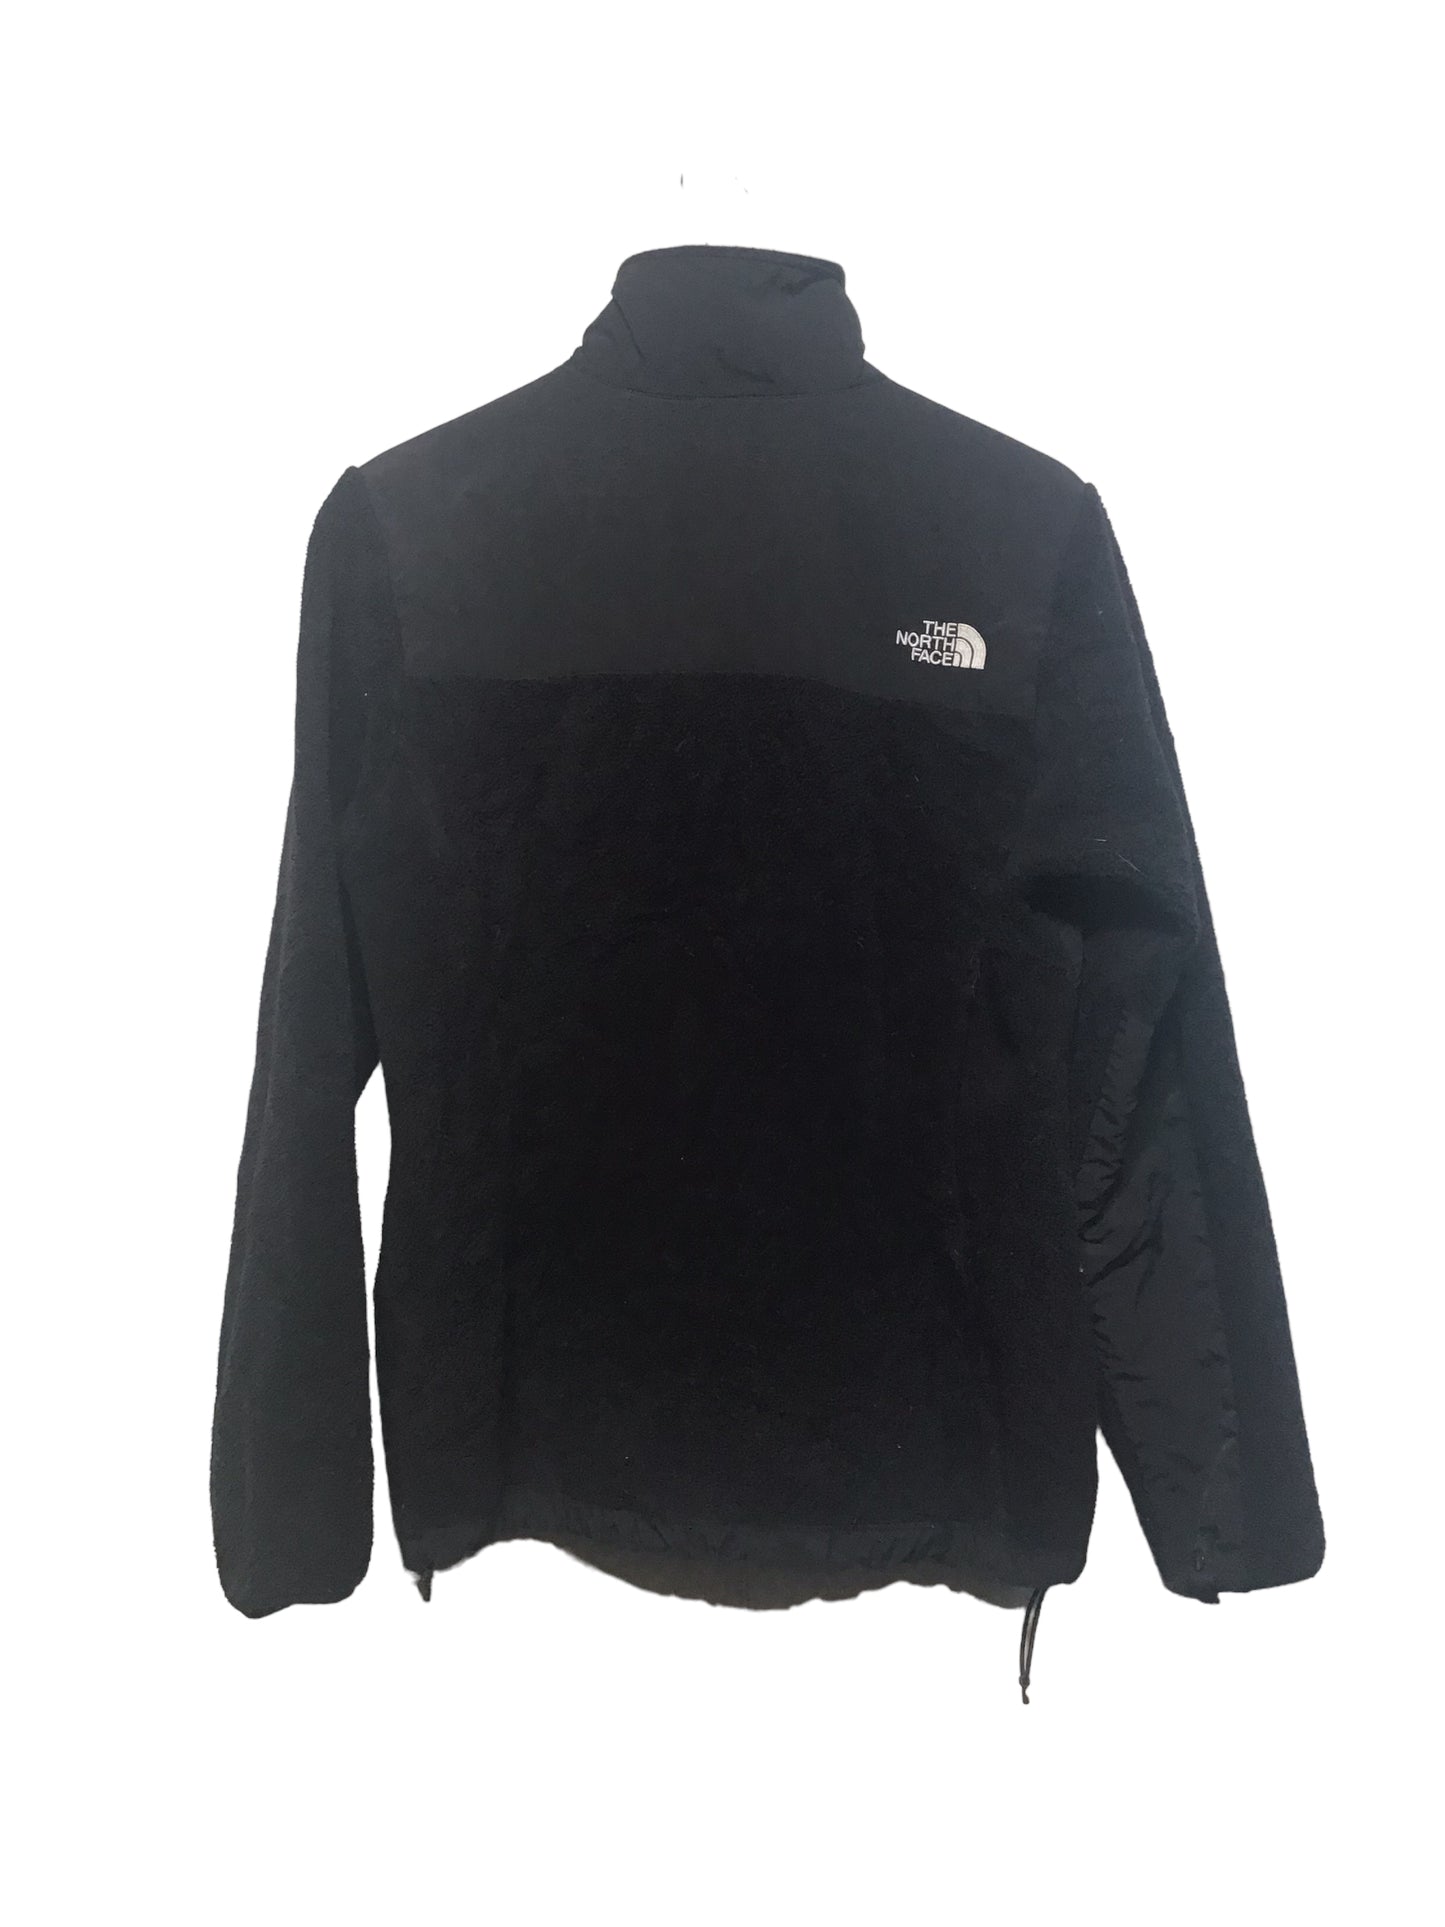 The North Face Black Denali Jacket (Women’s Size M)